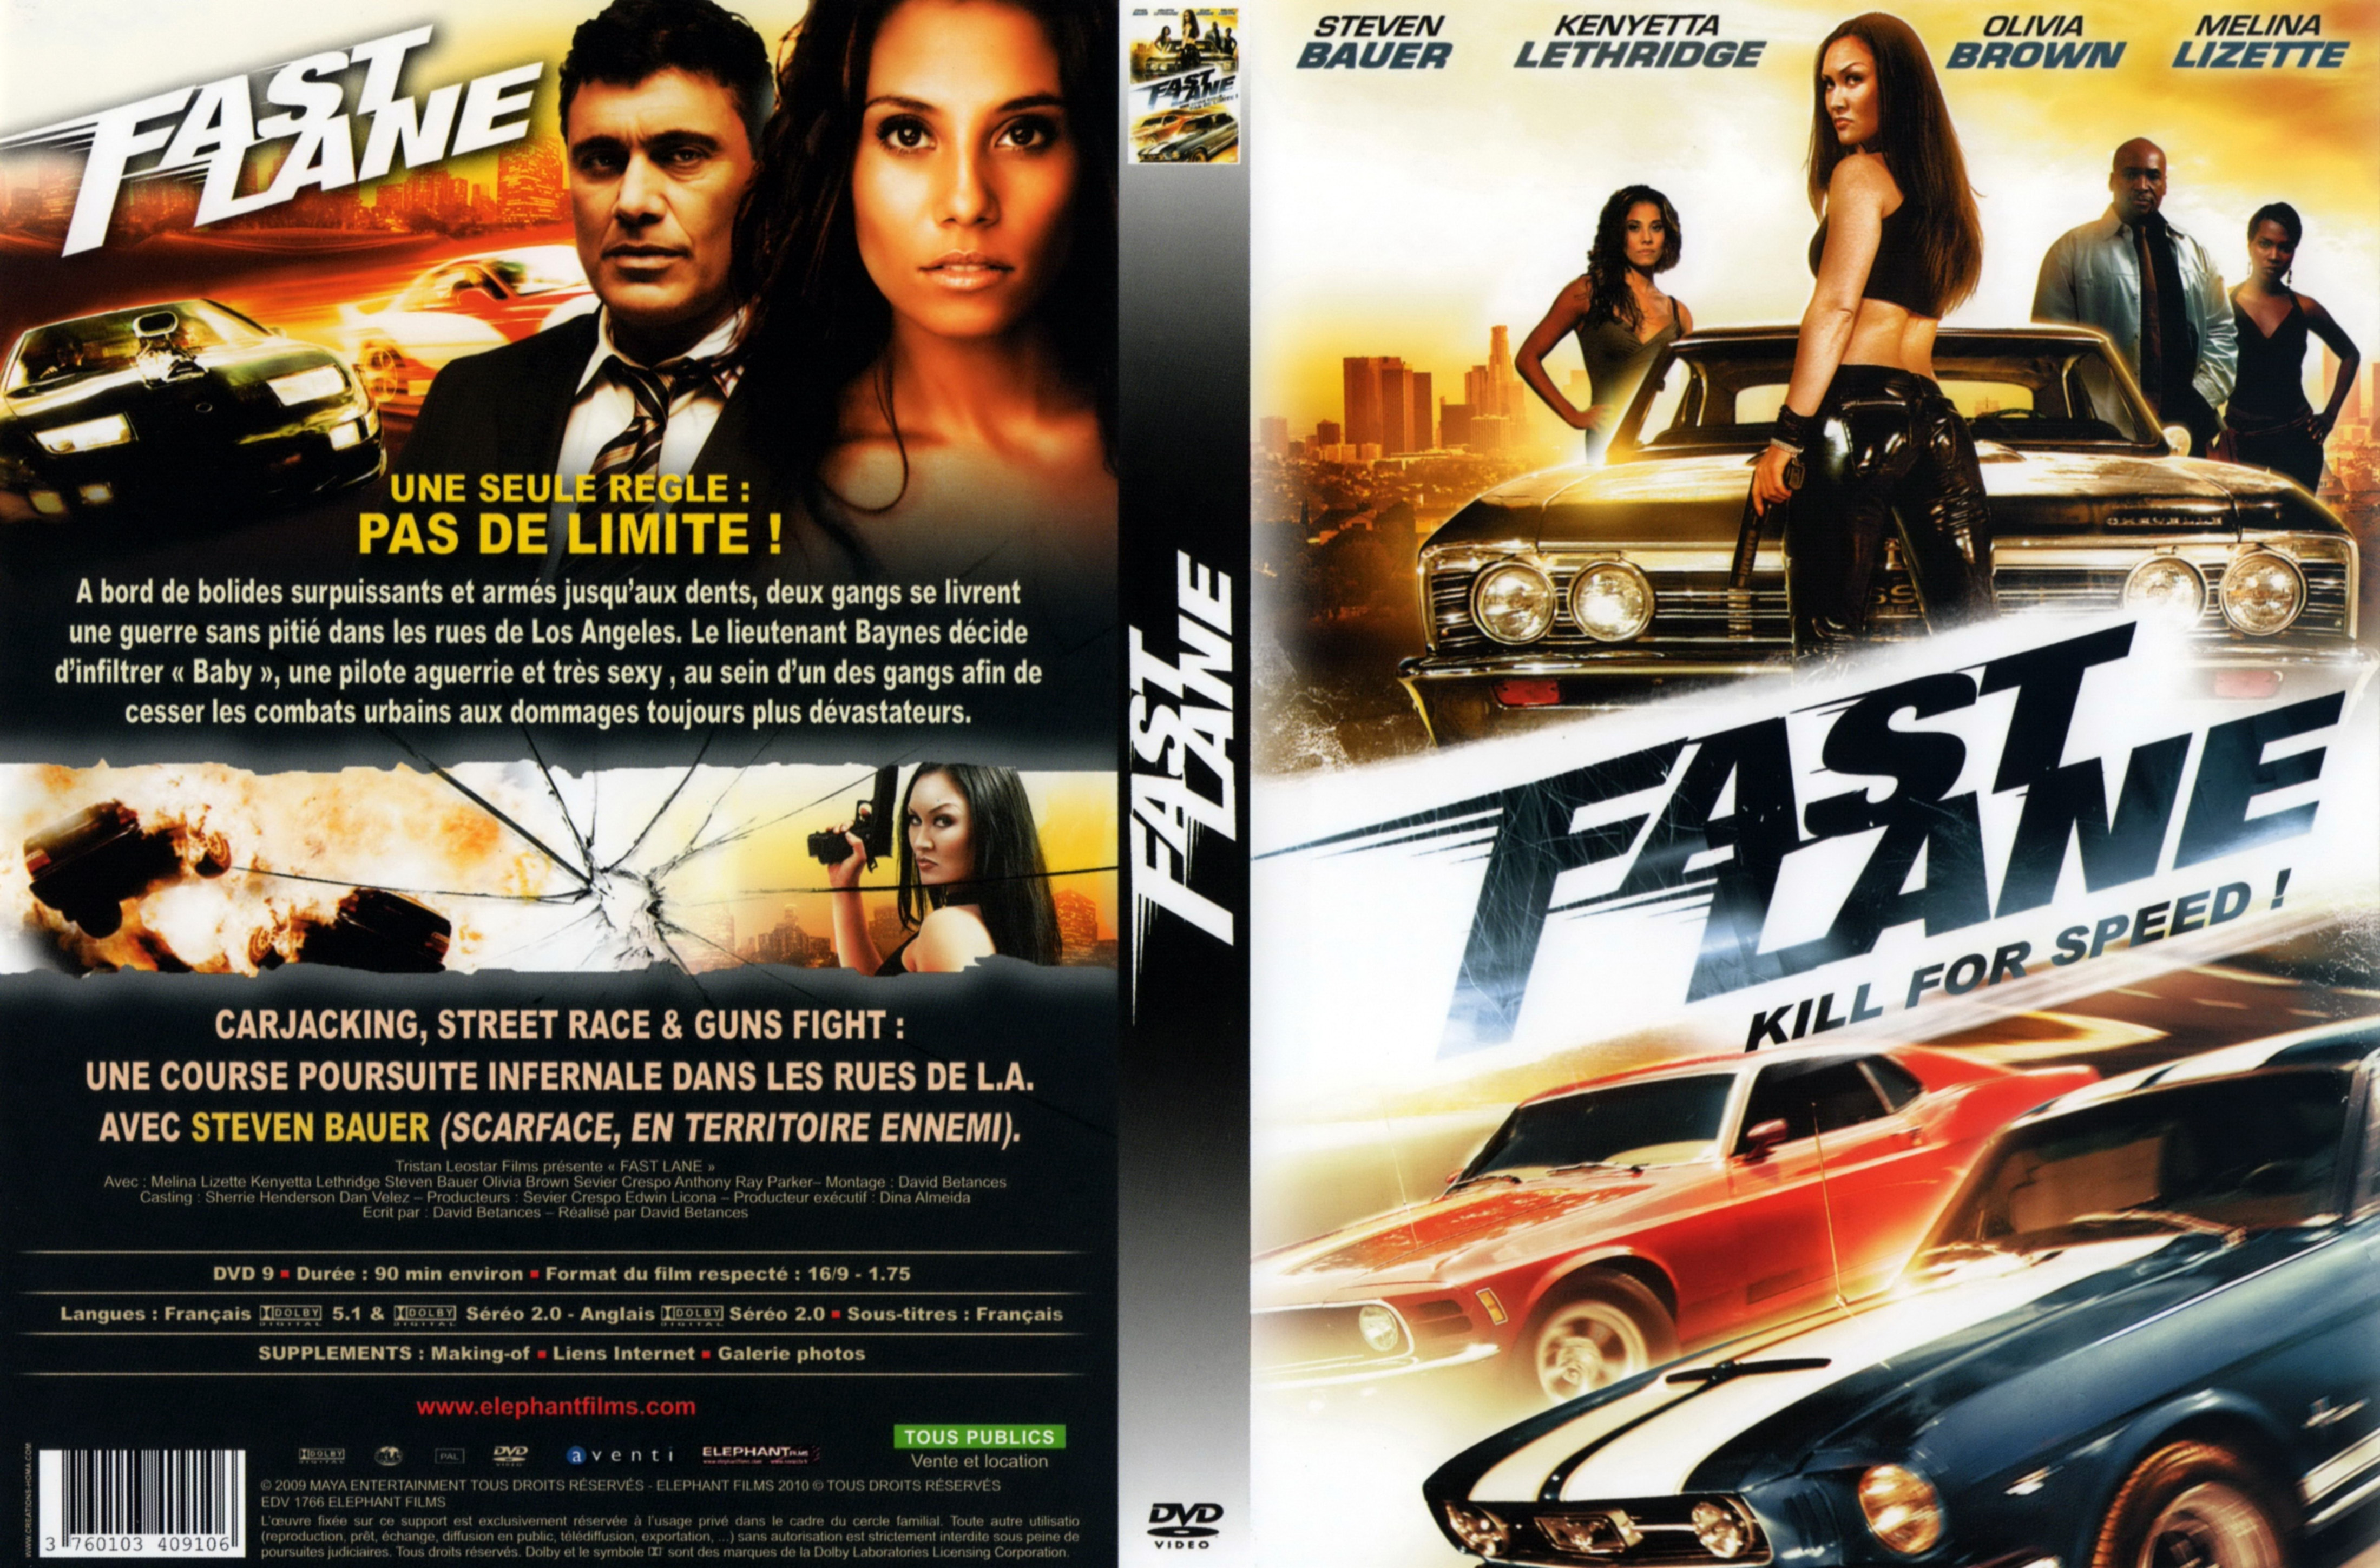 Jaquette DVD Fast lane